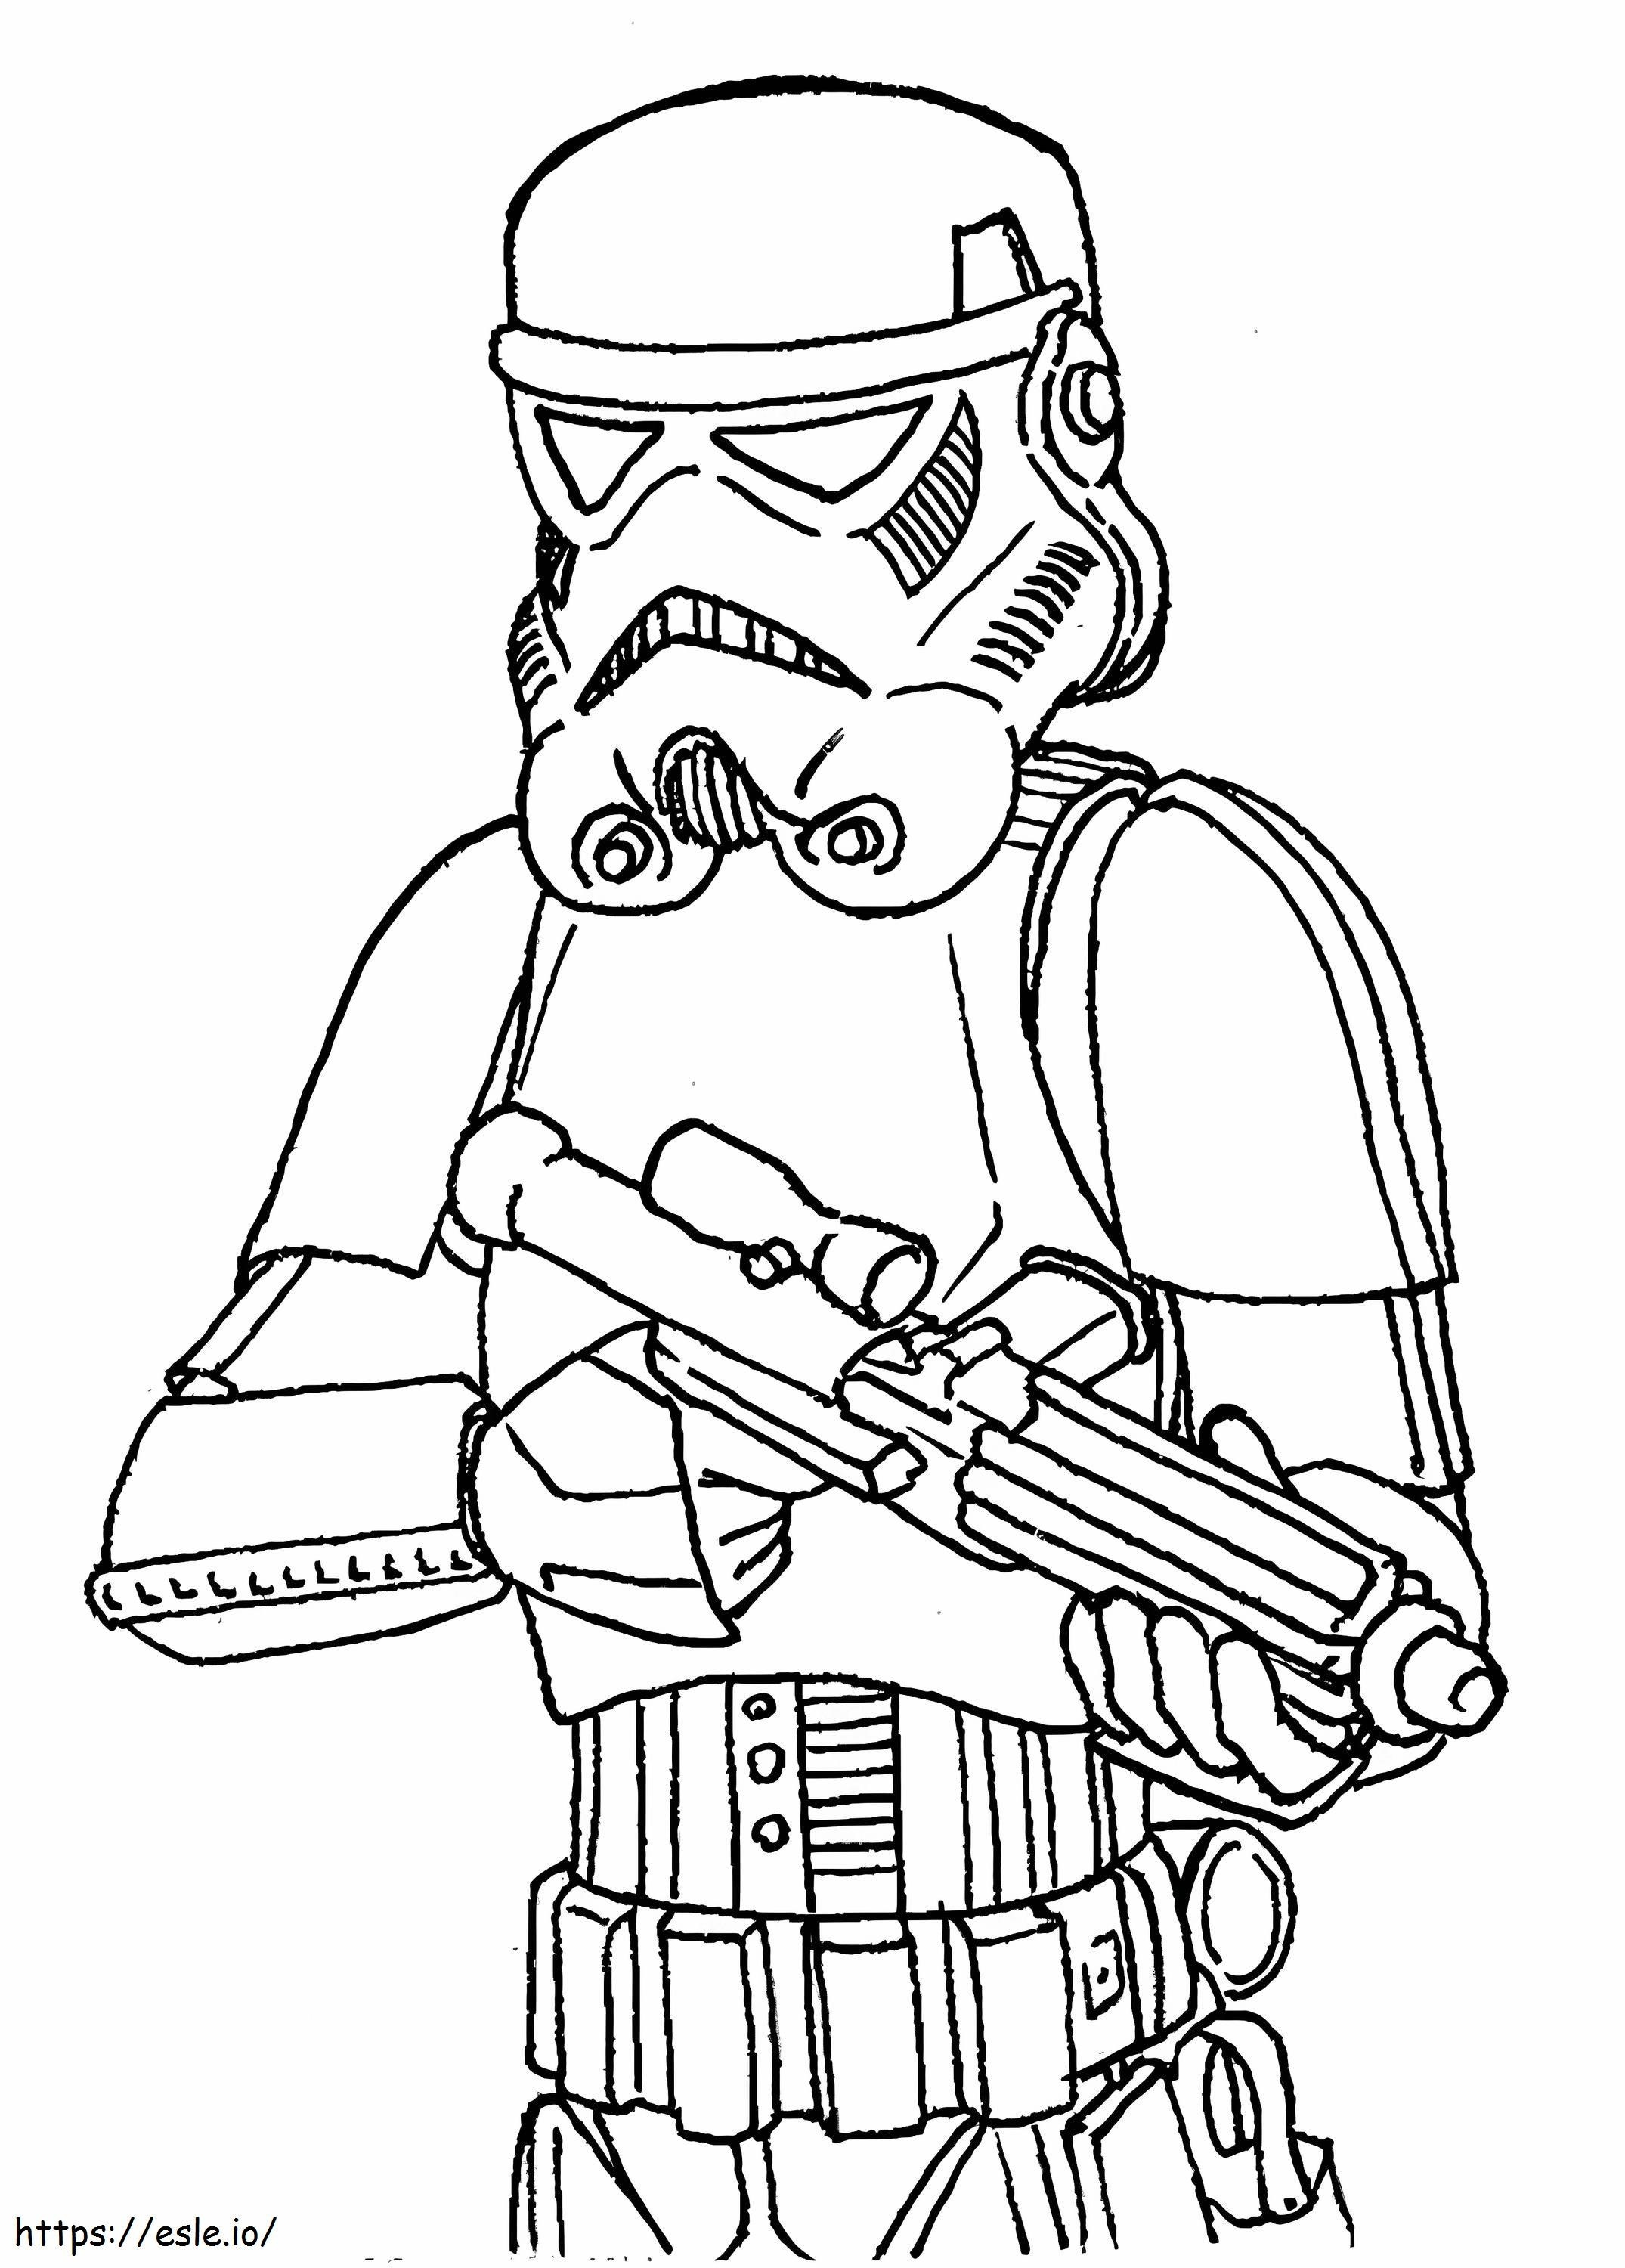 Coloriage Stormtrooper 1 734X1024 à imprimer dessin